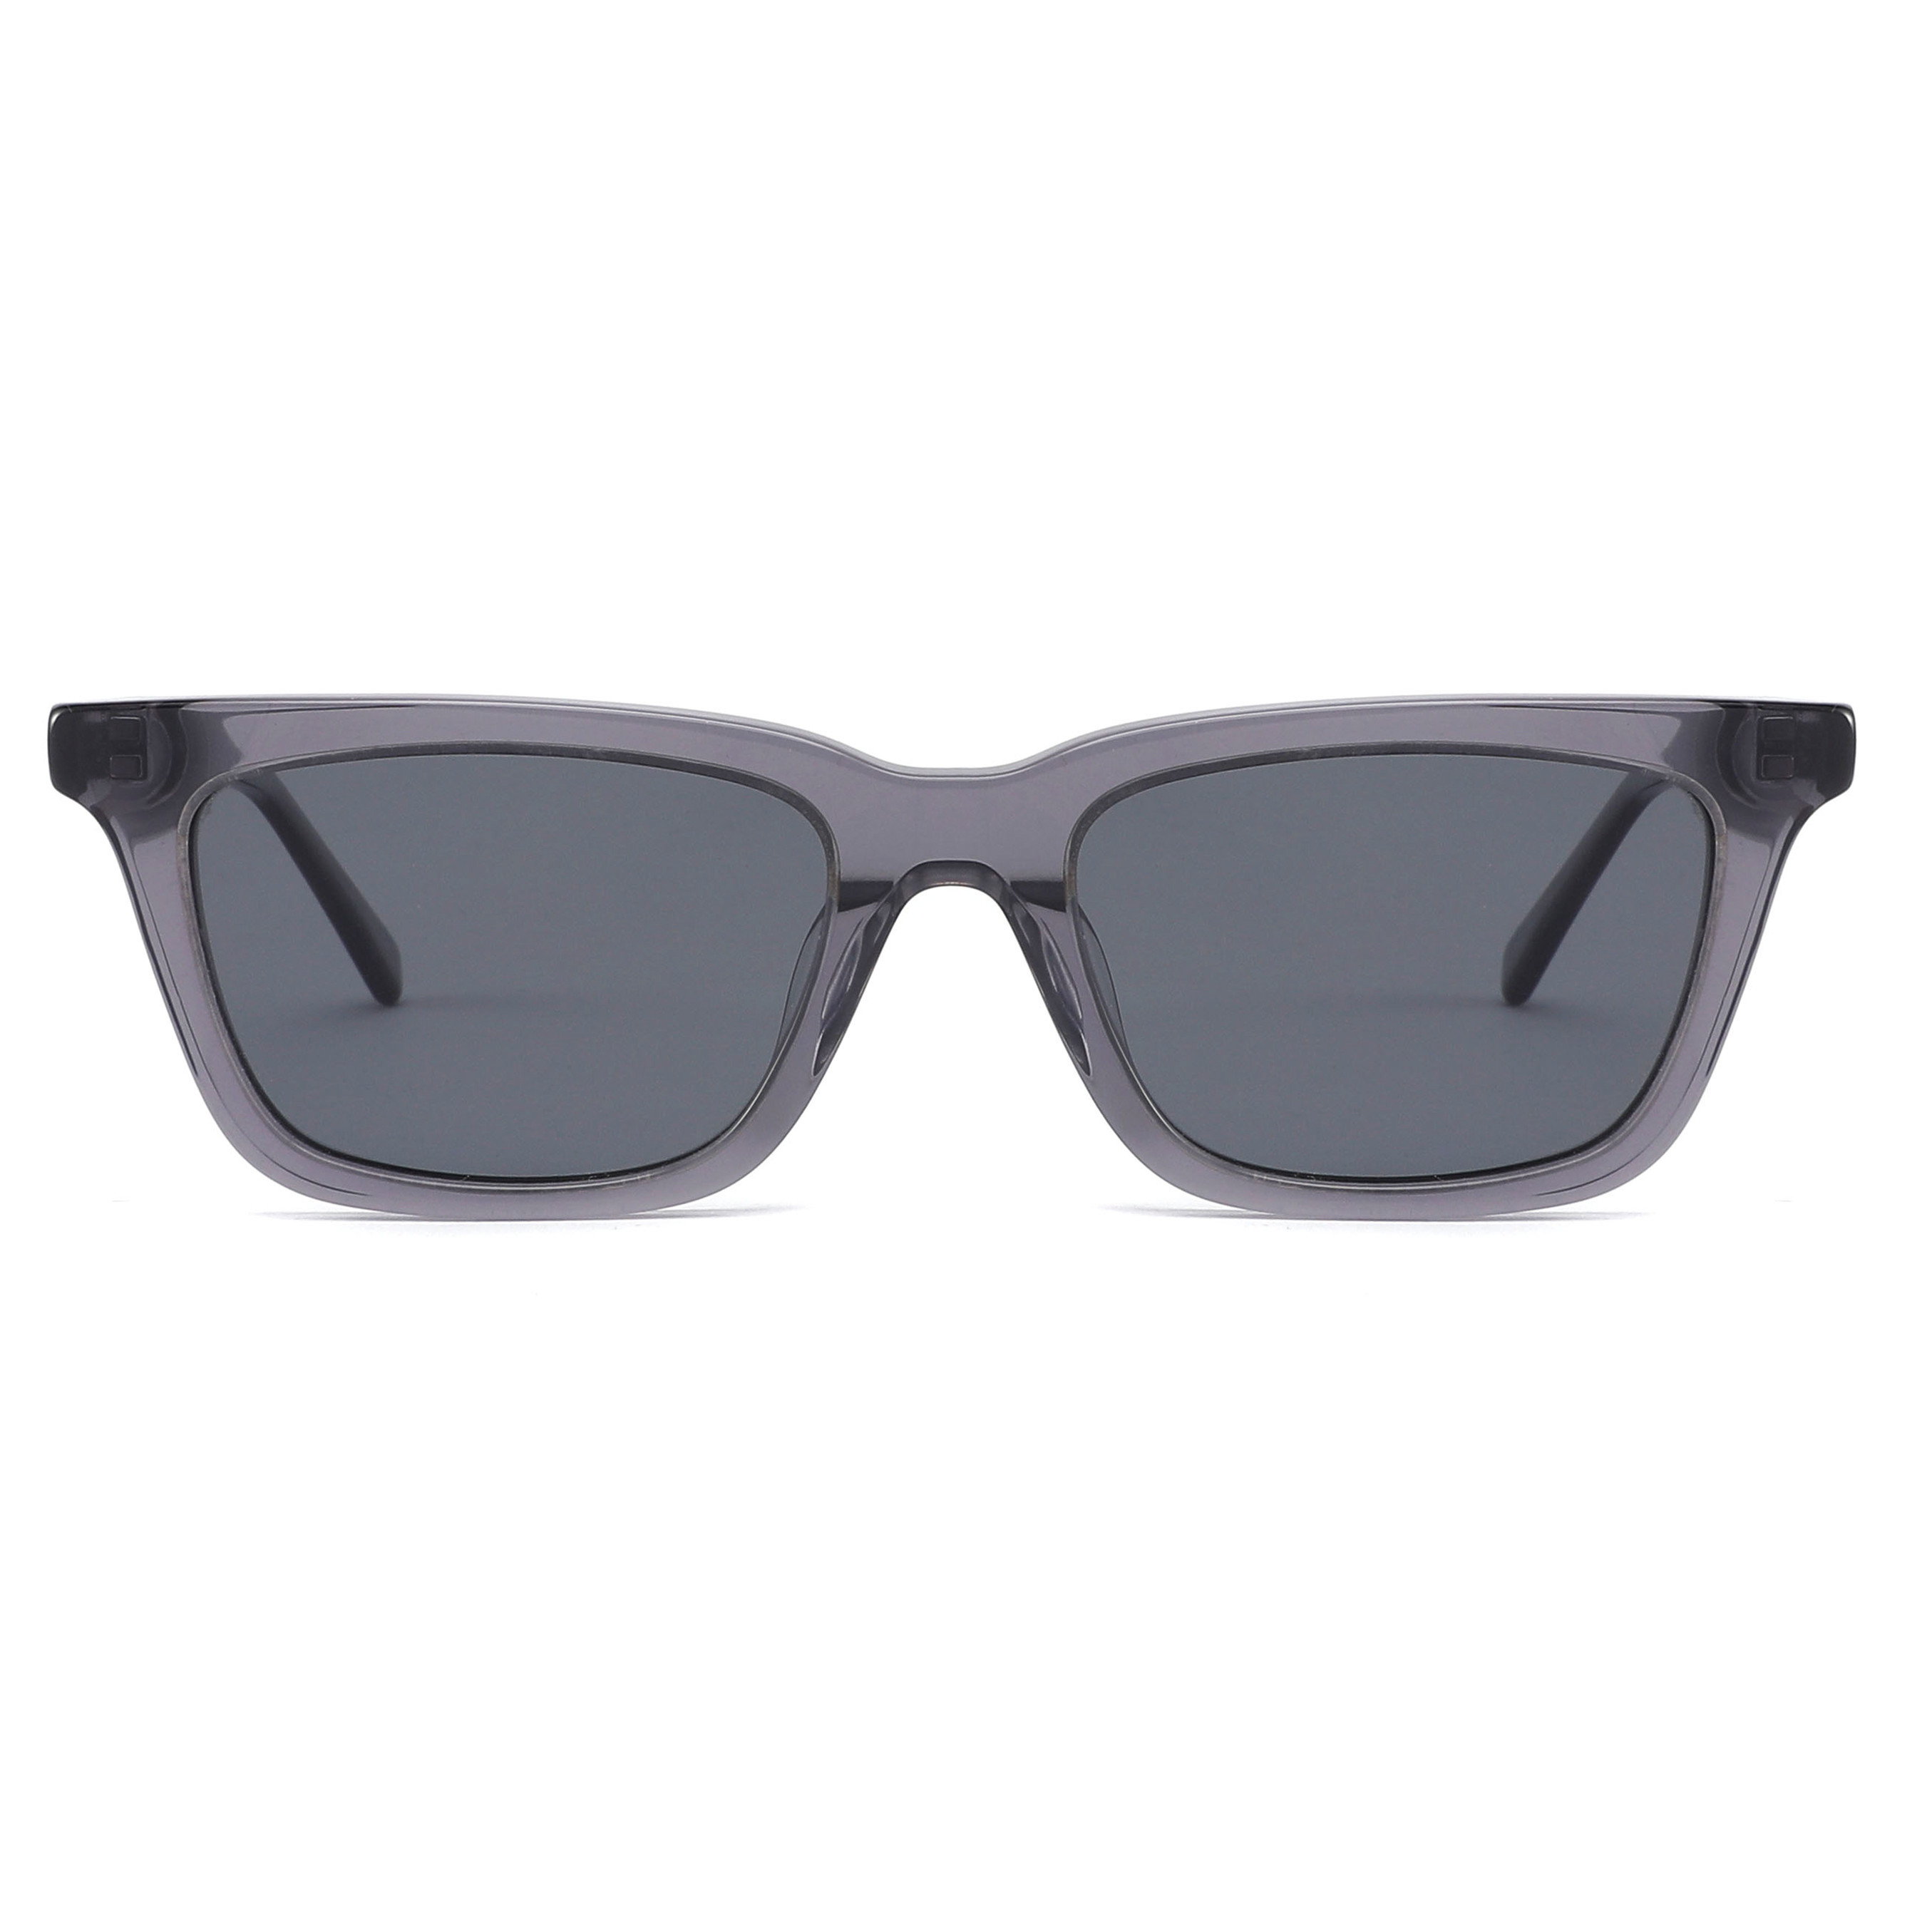  Rectangular Classic Acetate Sunglasses Daily Polarized Aviator Sunglasses Manufactures